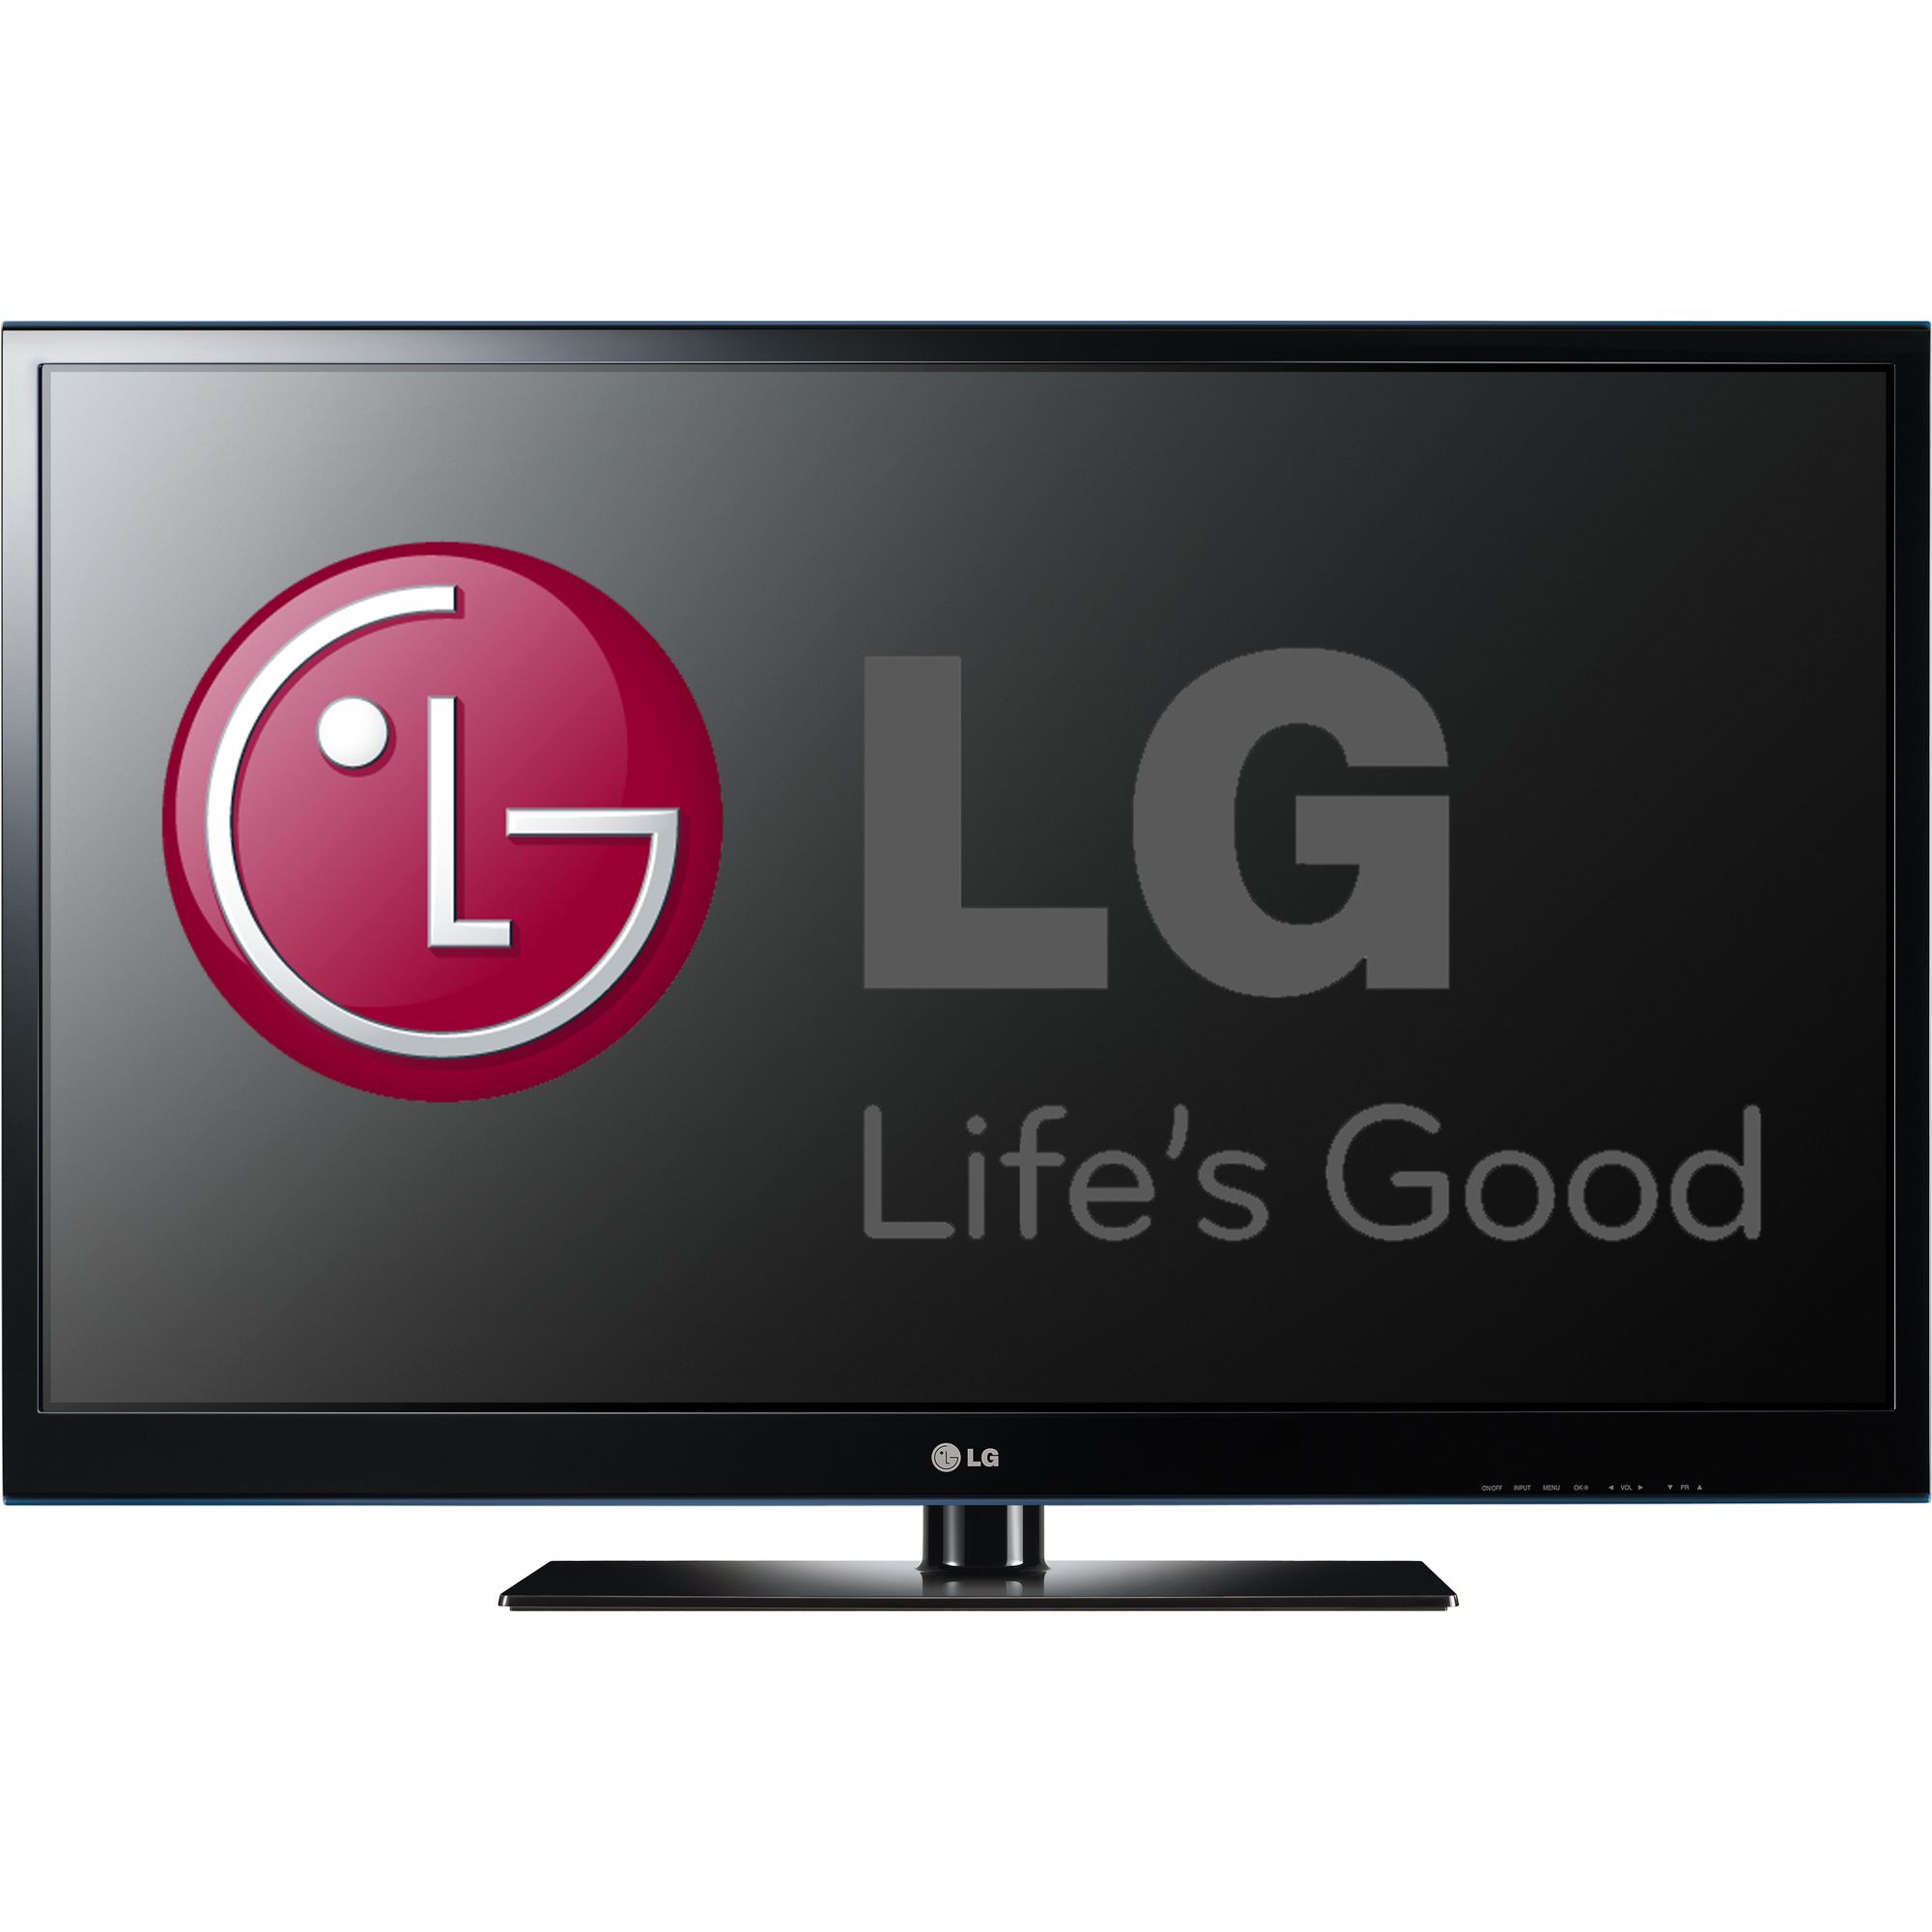 Lg телевизор ру. Телевизор LG 42 дюйма 2013 года. Телевизоры LG 2014 года LG Smart TV. Телевизоры LG 2013г. Телевизор в 2013 году выпуск LG 32 дюйм.